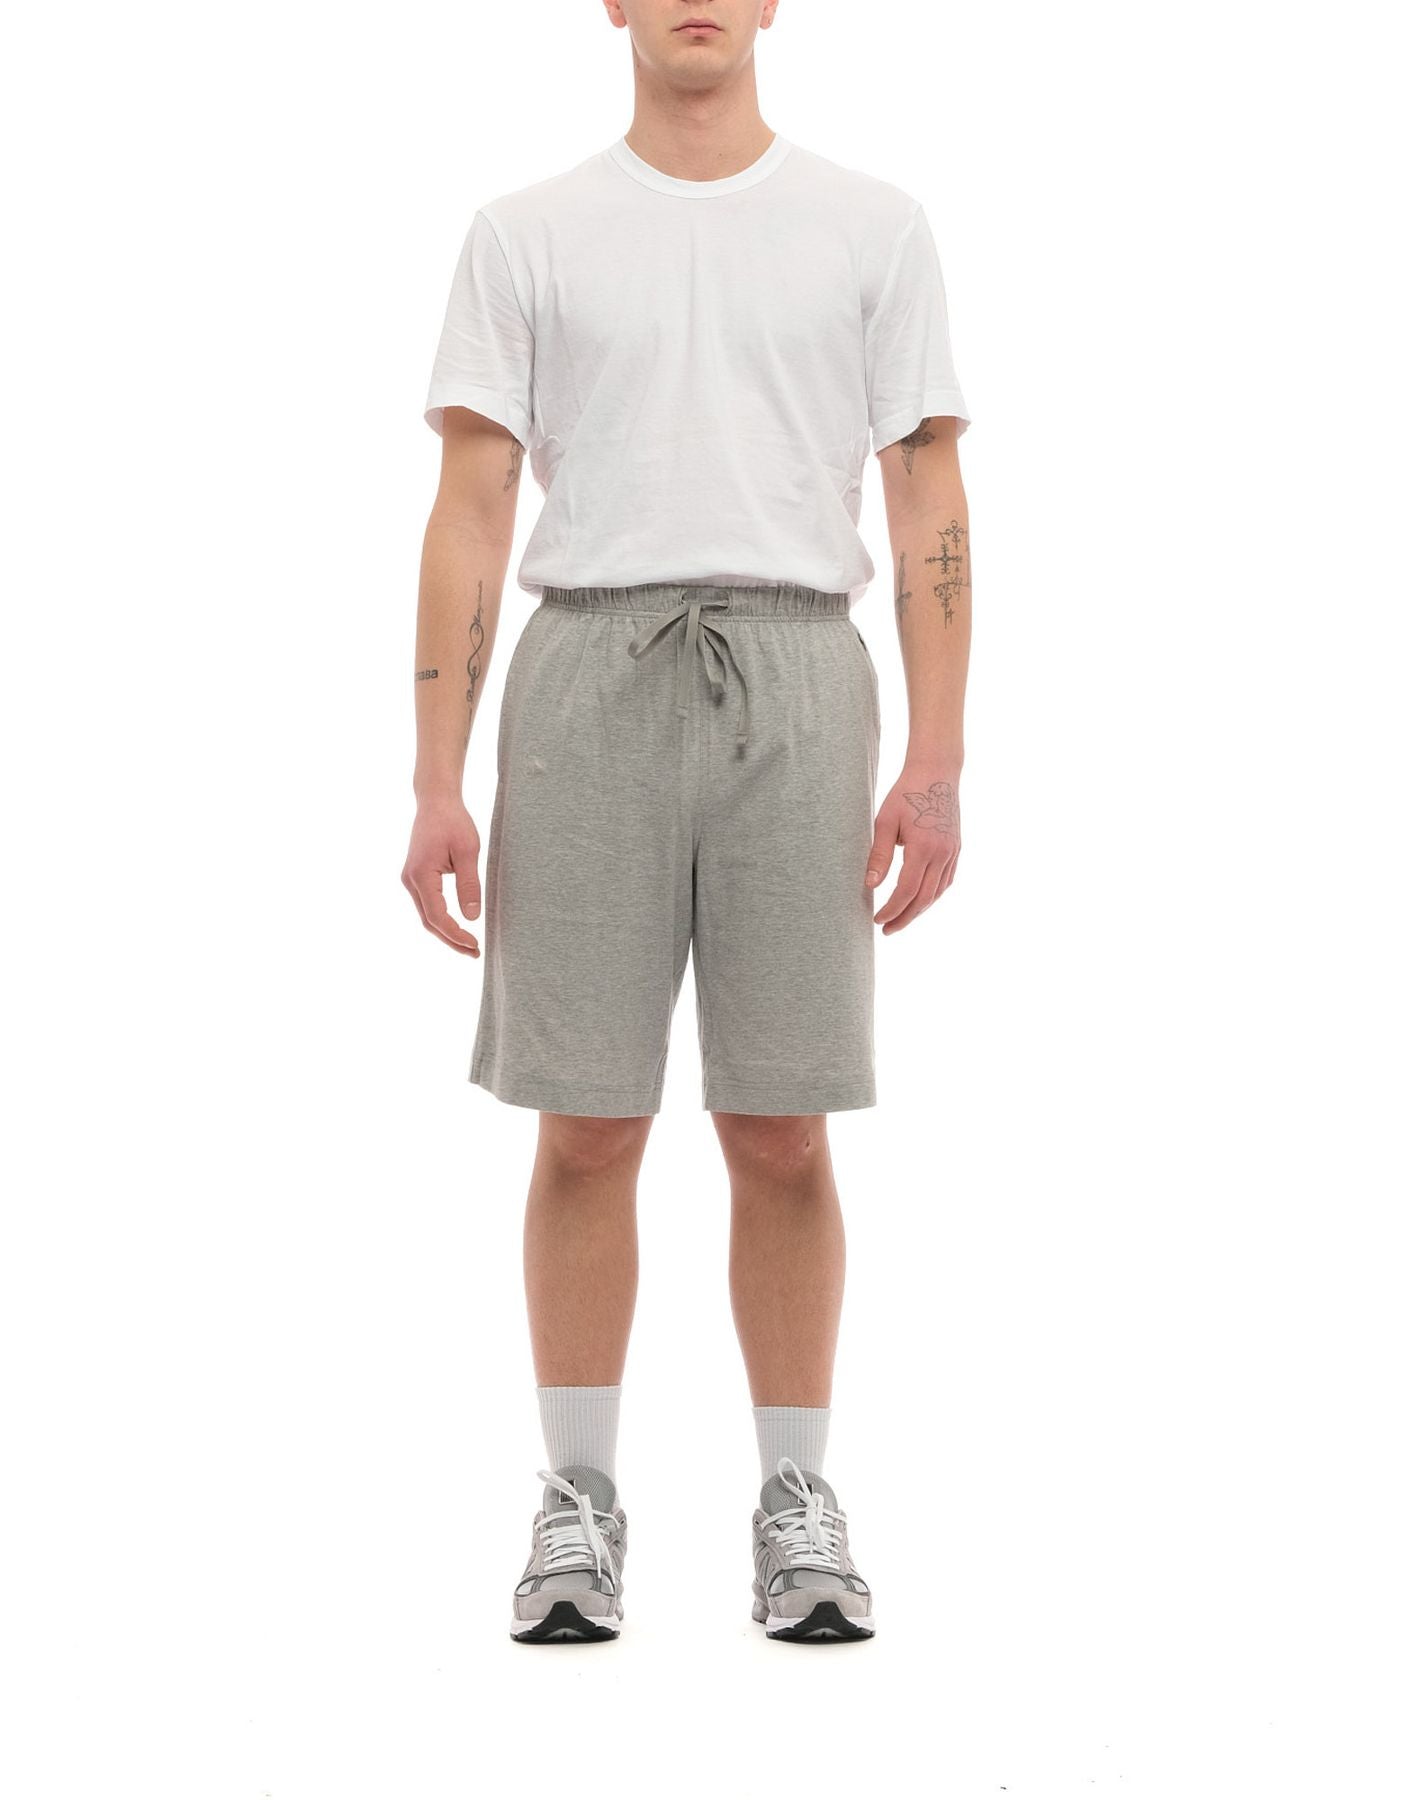 Shorts for man 714844761001 GREY Polo Ralph Lauren